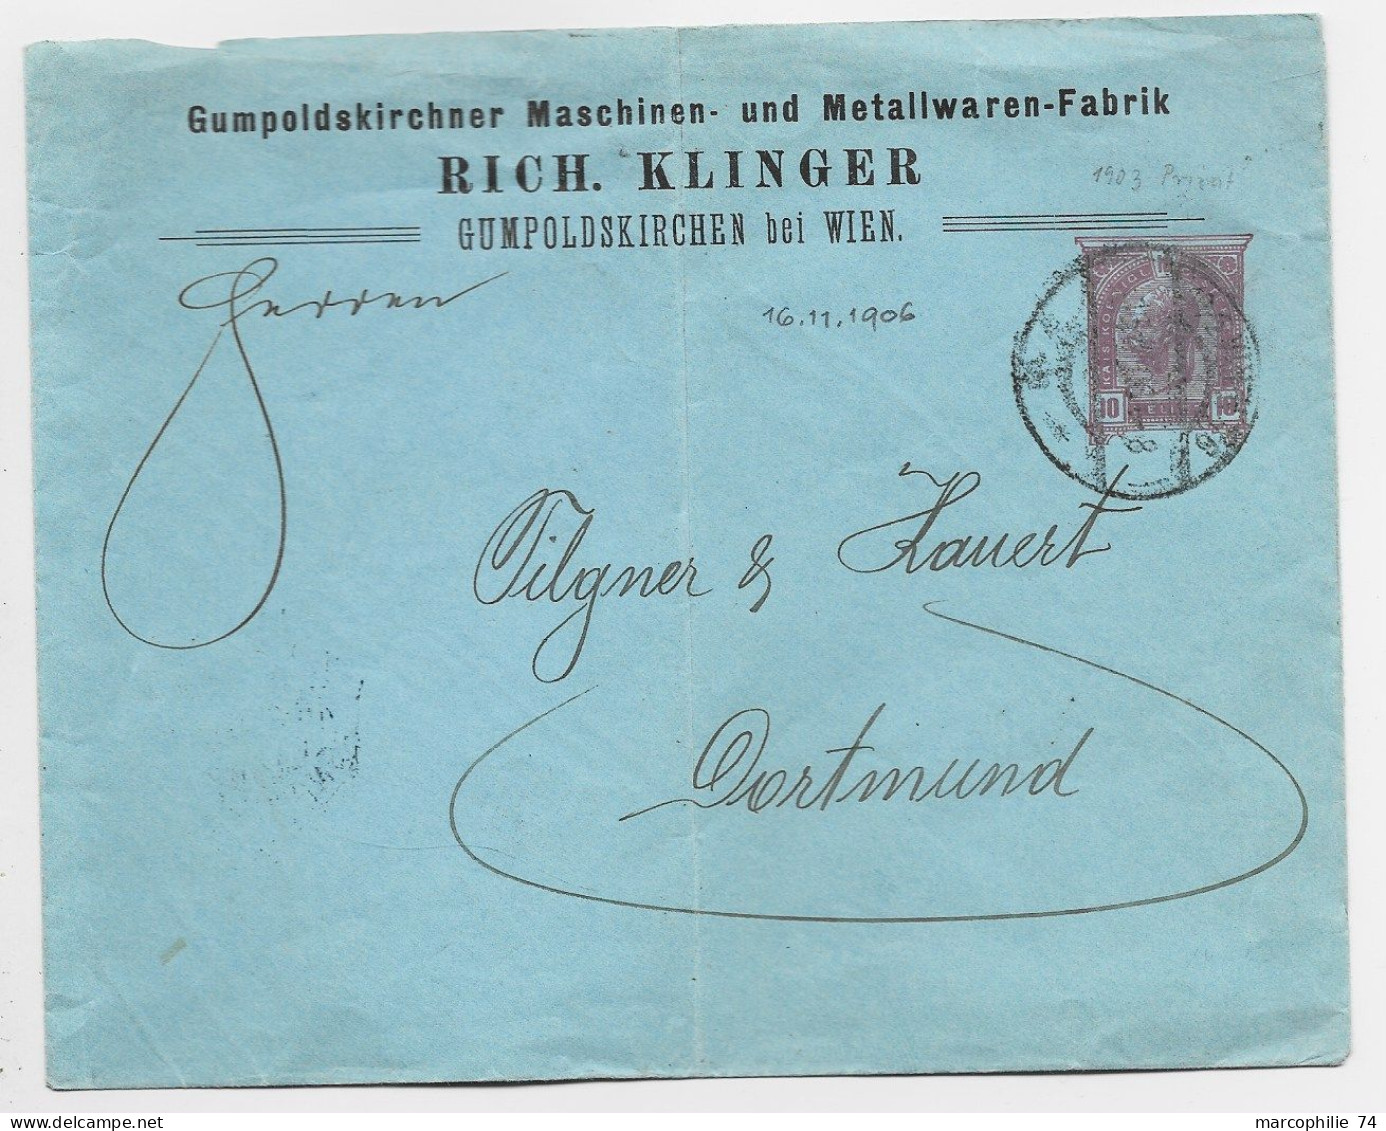 AUSTRIA ENTIER 10 HELLER ENVELOPPE COVER BRIEF REPIQUAGE MASCHINEN FABRIK RICH KLINGER WIEN 1906 TO GERMANY - Enveloppes